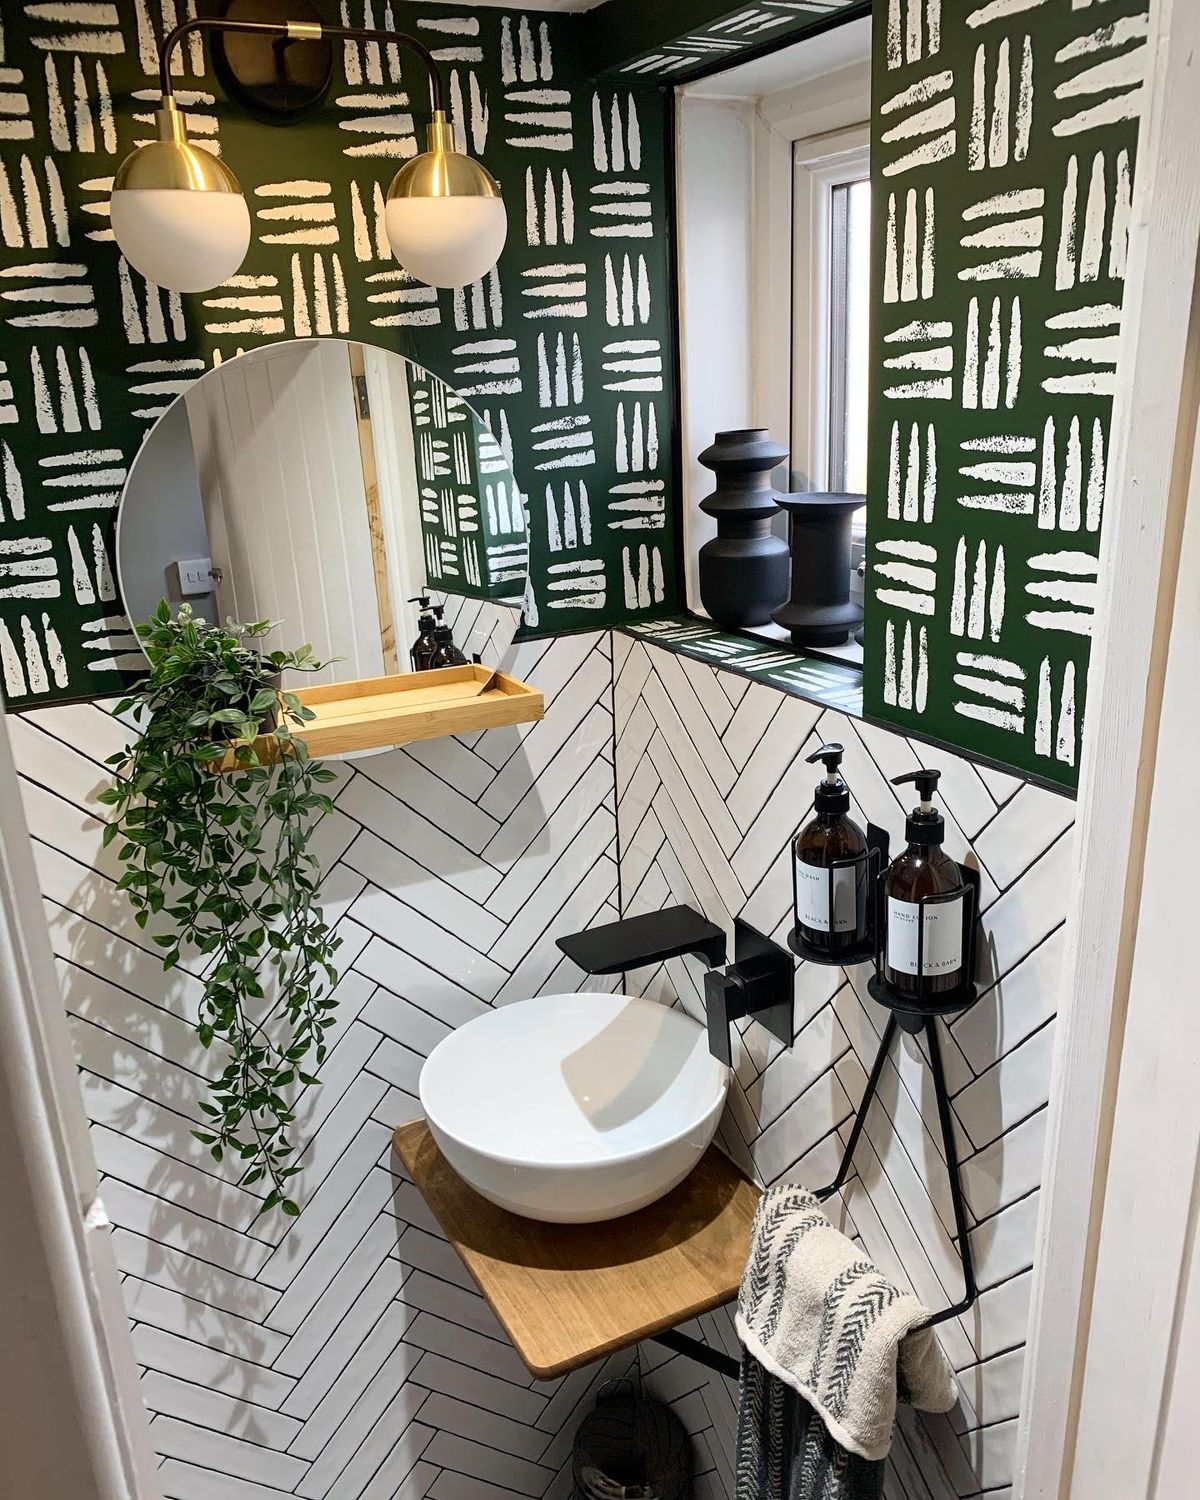 Small cloakroom bathroom ideas